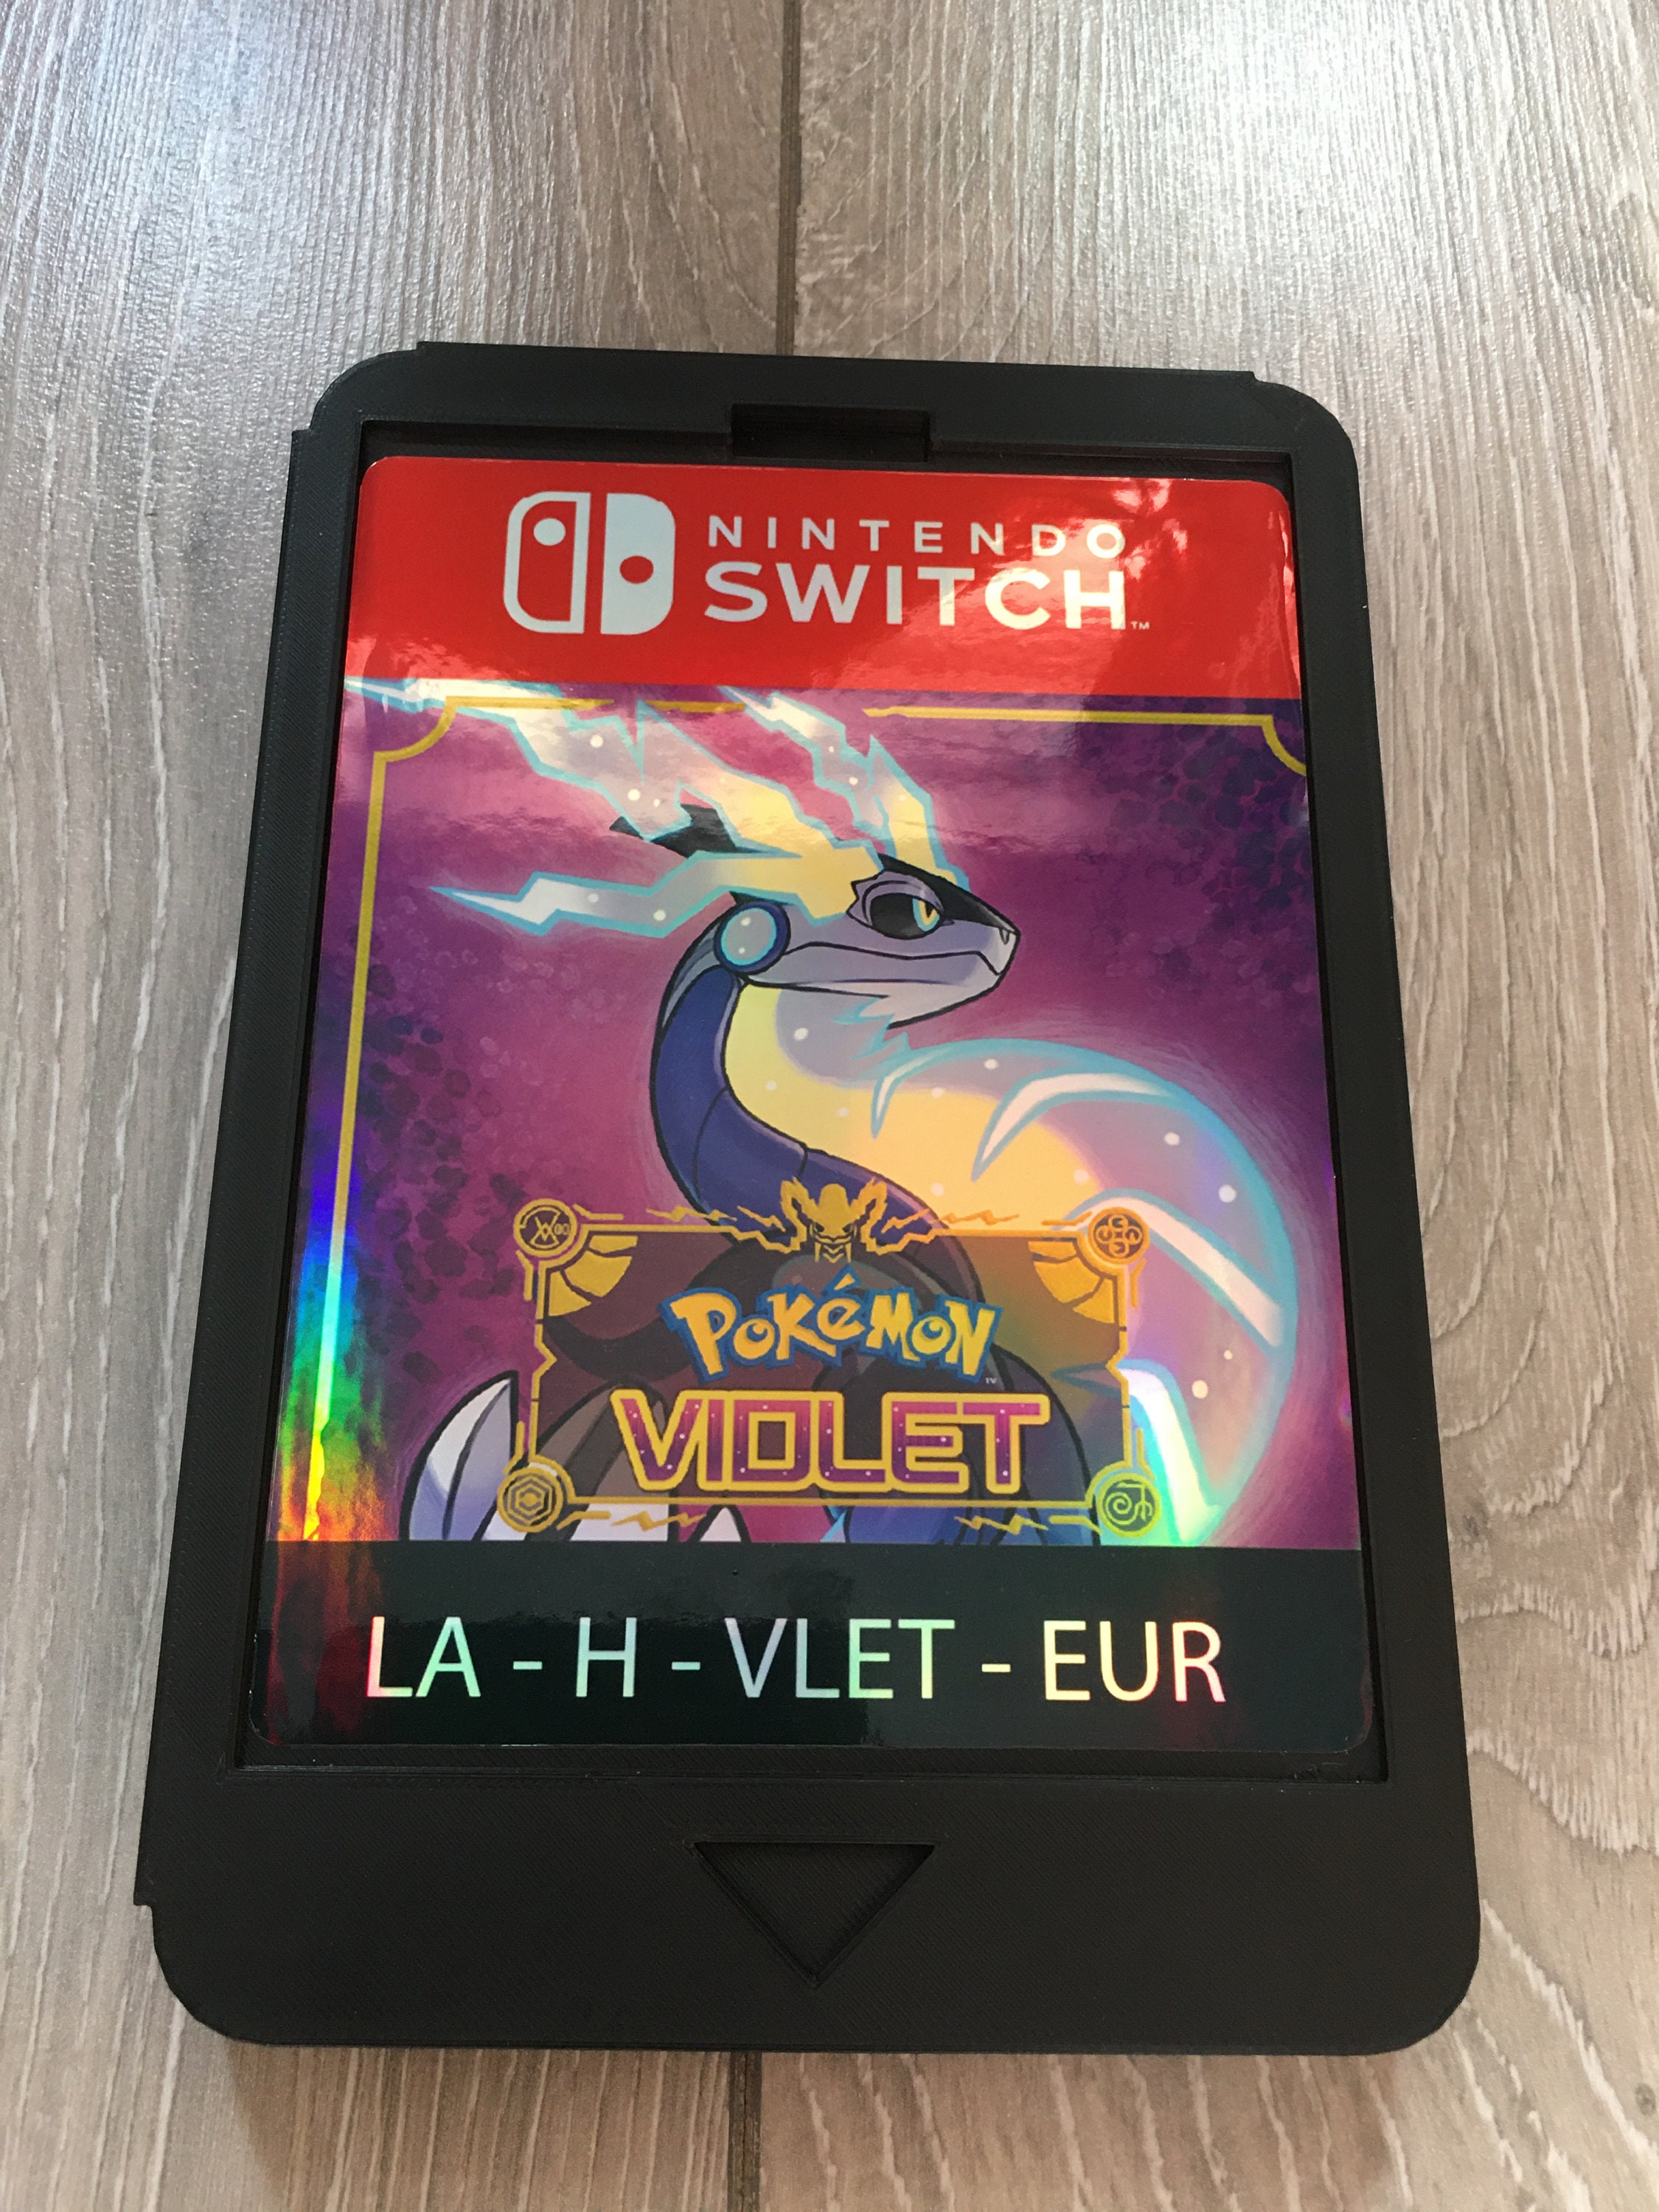 Pokémon Violet - Nintendo Switch - Achat jeux video Maroc 